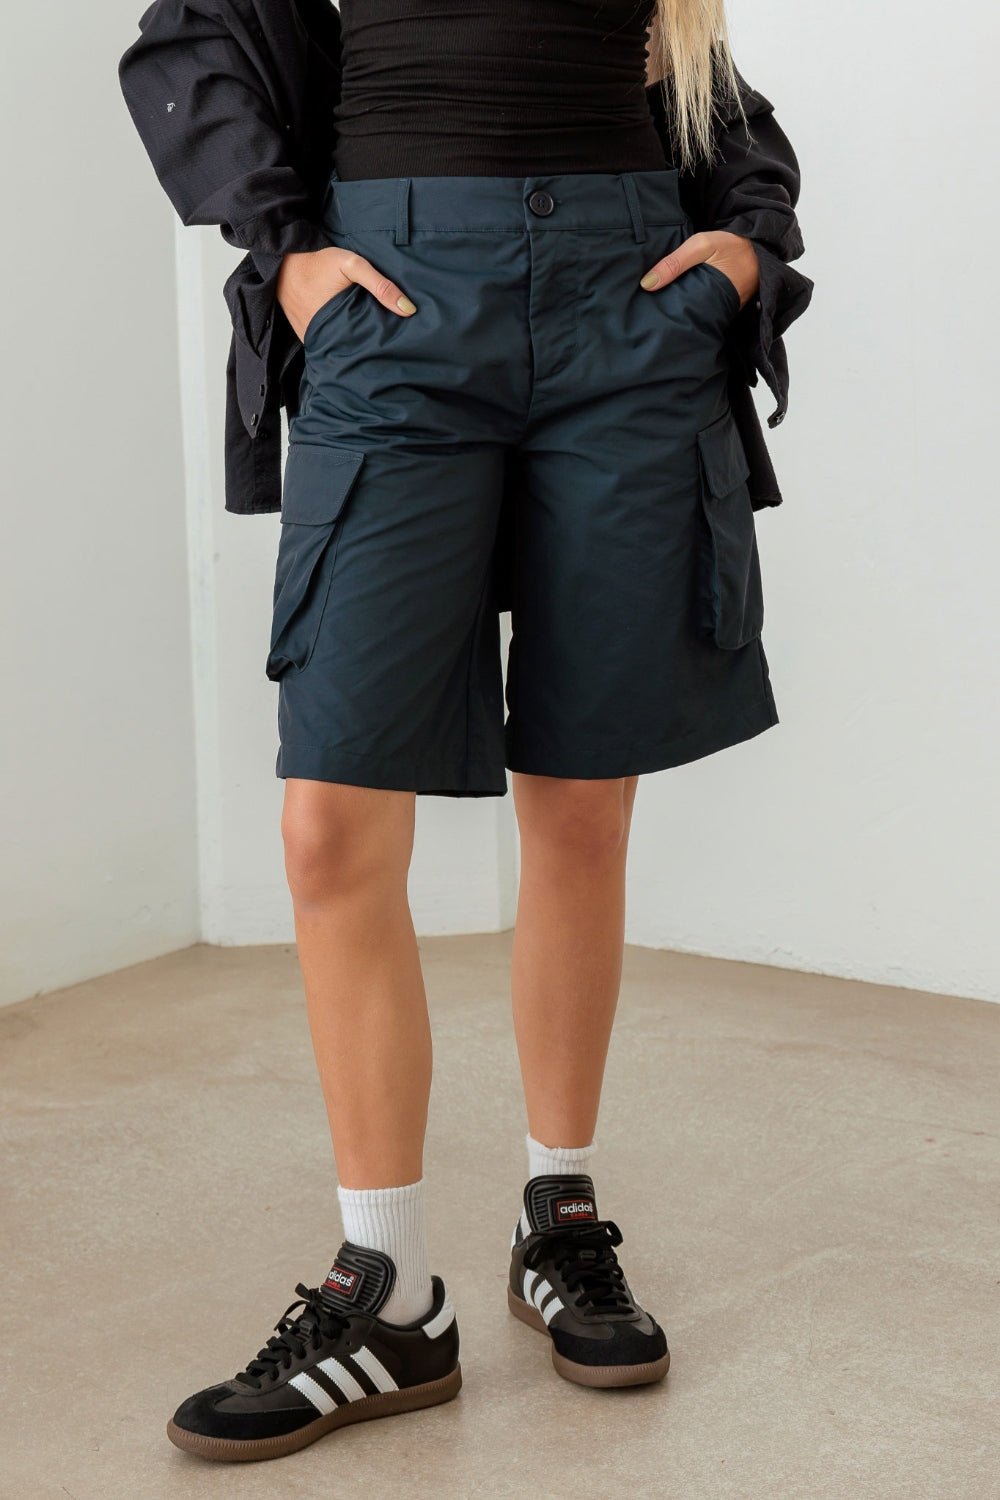 Le Lis Navy Cargo Bermuda Shorts - Shorts - Navy - Bella Bourget